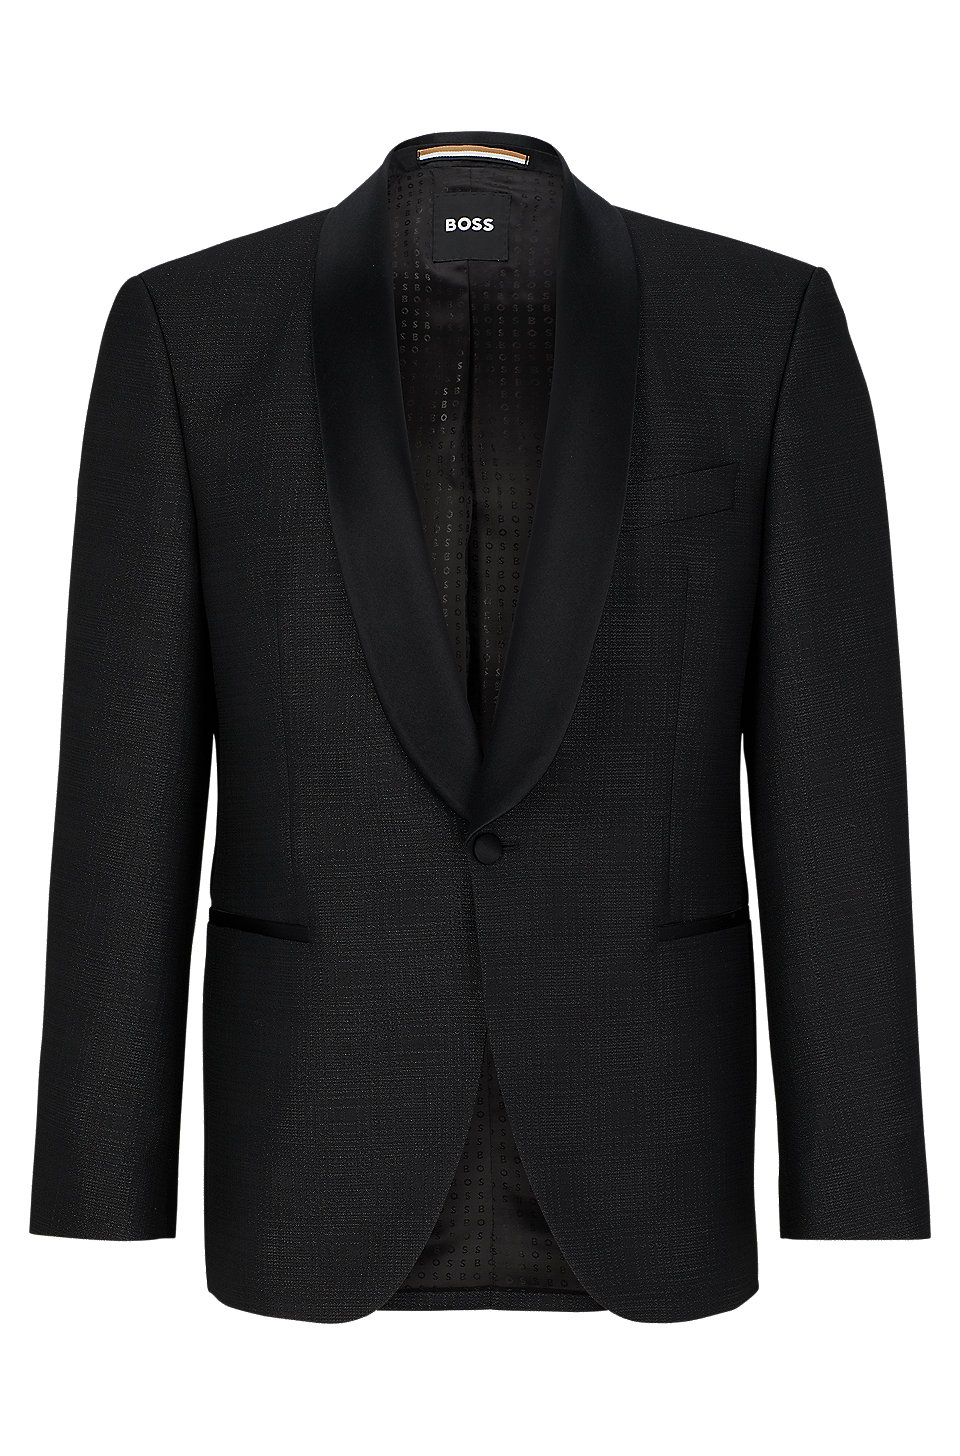 BOSS - Regular-fit tuxedo jacket in a checked wool blend